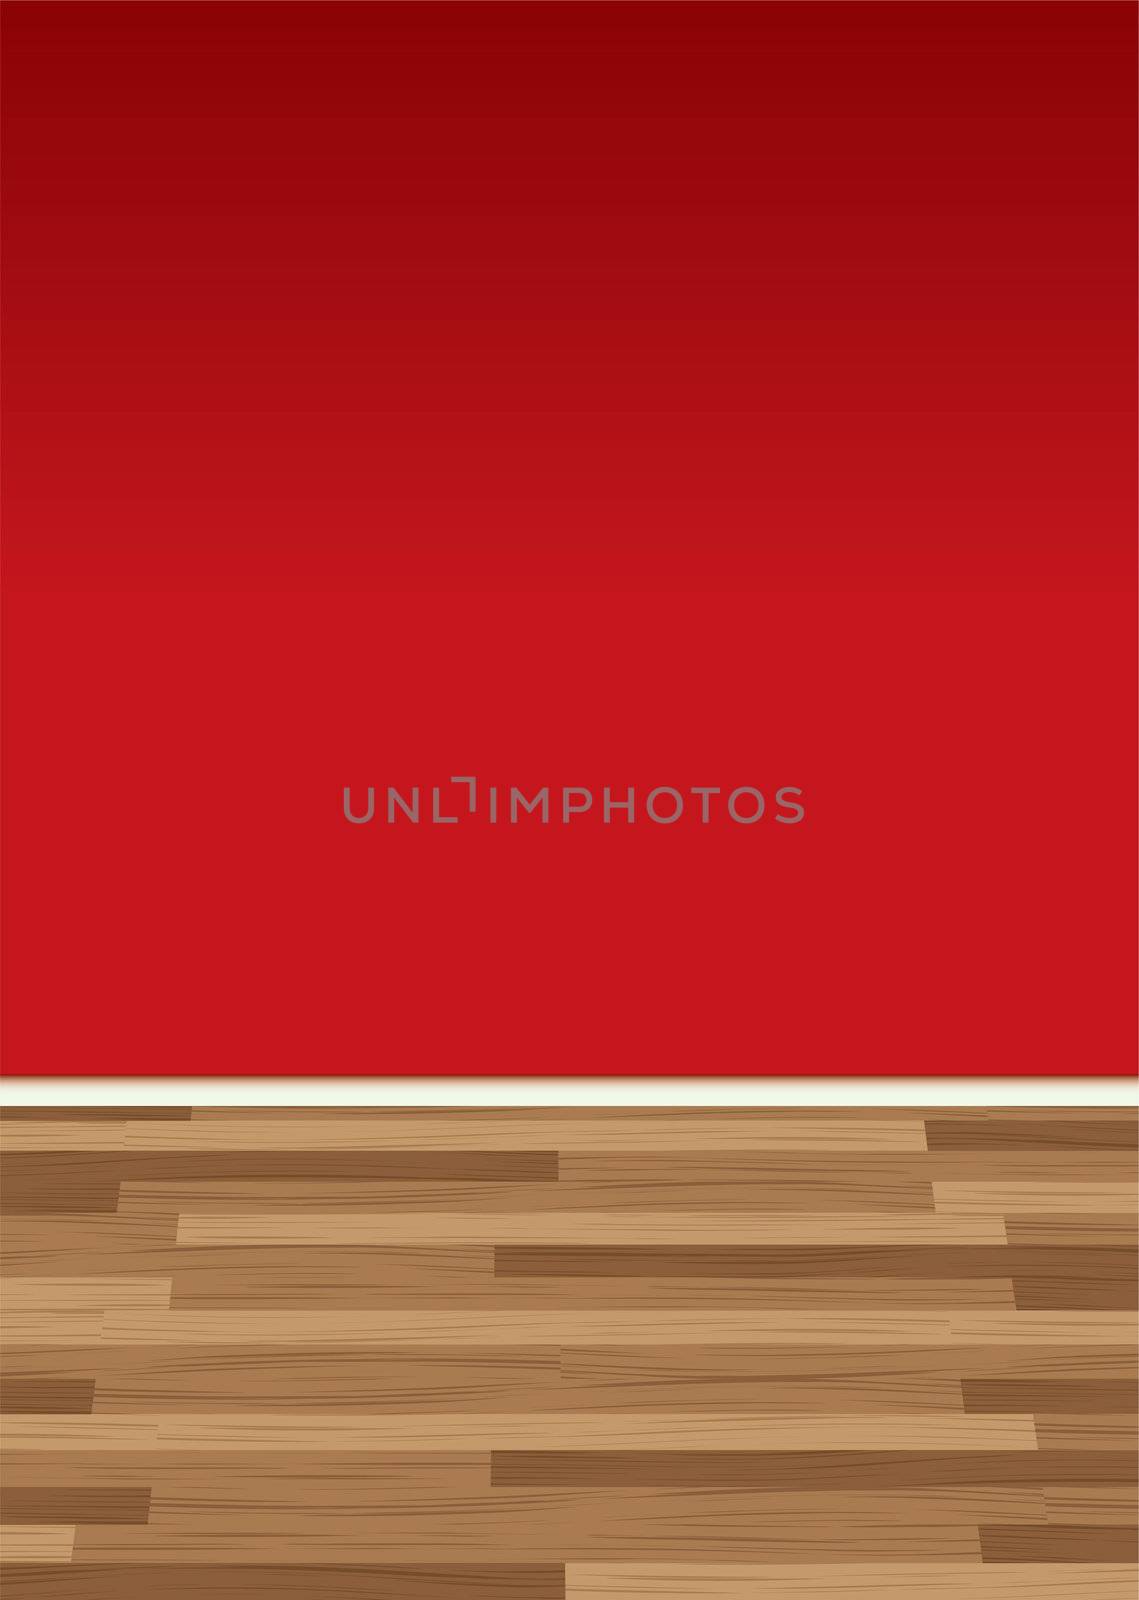 wood floor wall red by nicemonkey